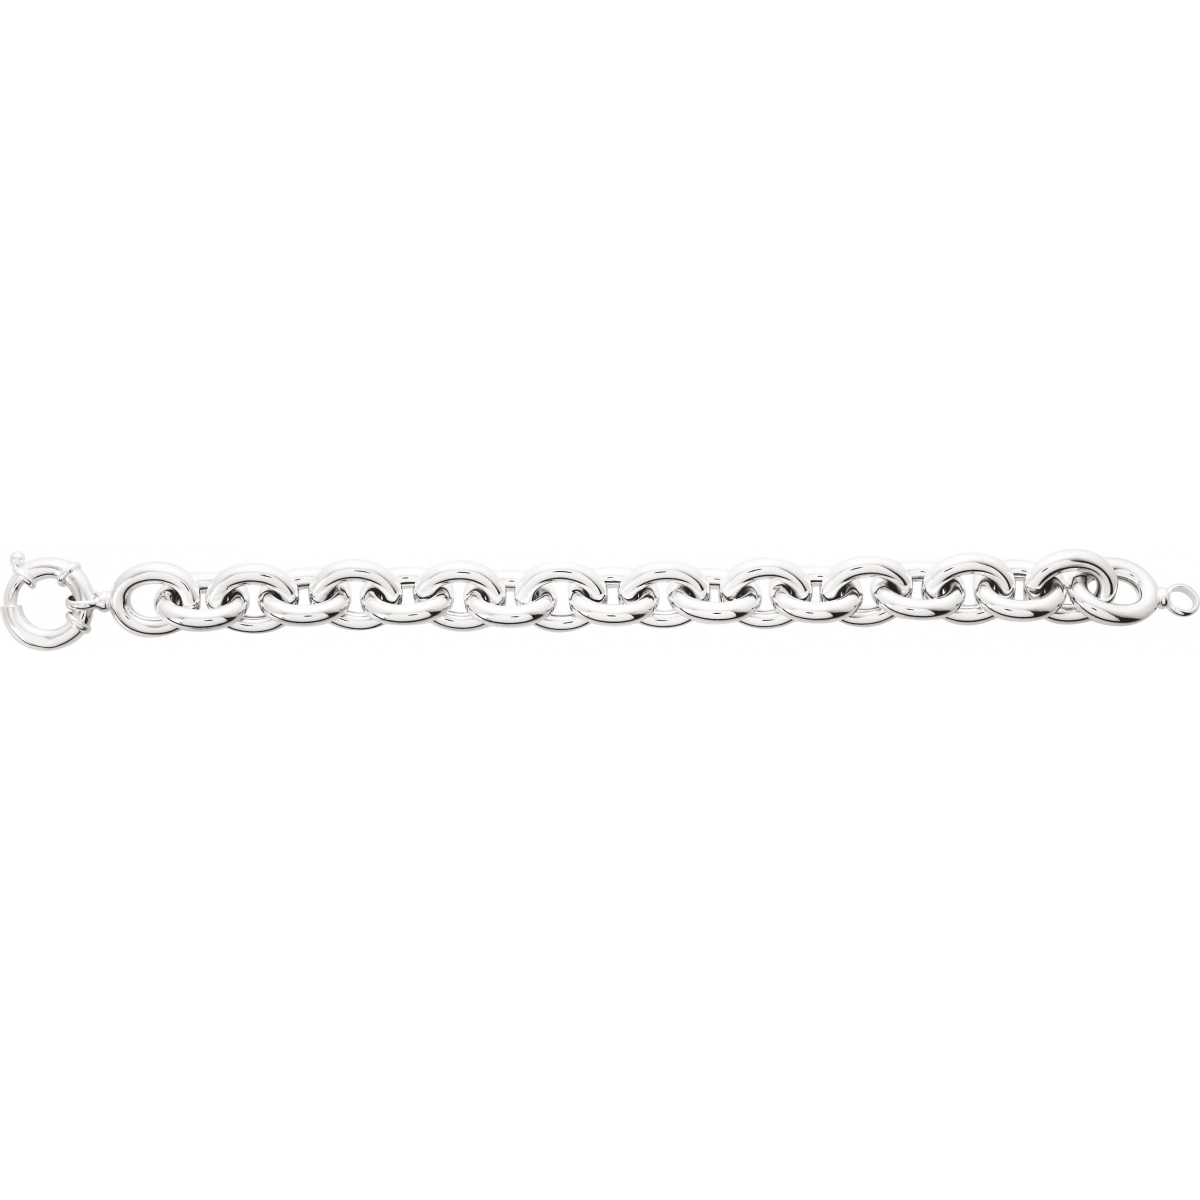 Bracelet 925 Silver Lua Blanca  326109 - Size 21